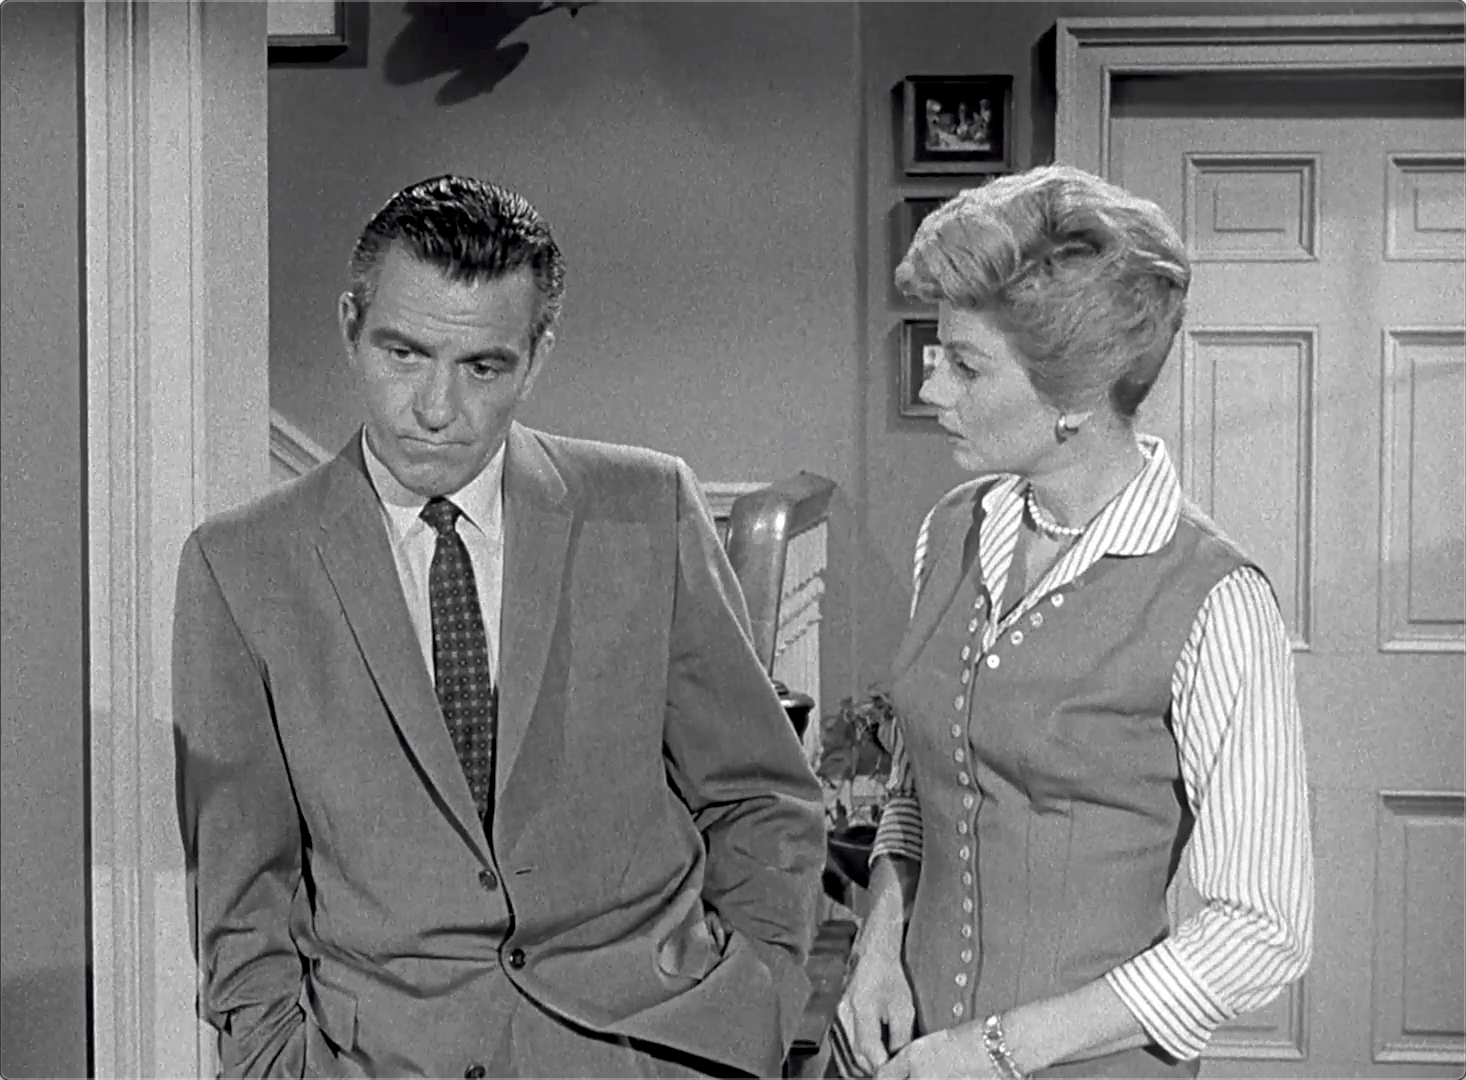 Leave it to Beaver S02E39 Most interesting Character (Jun.25.1959)-40.jpg